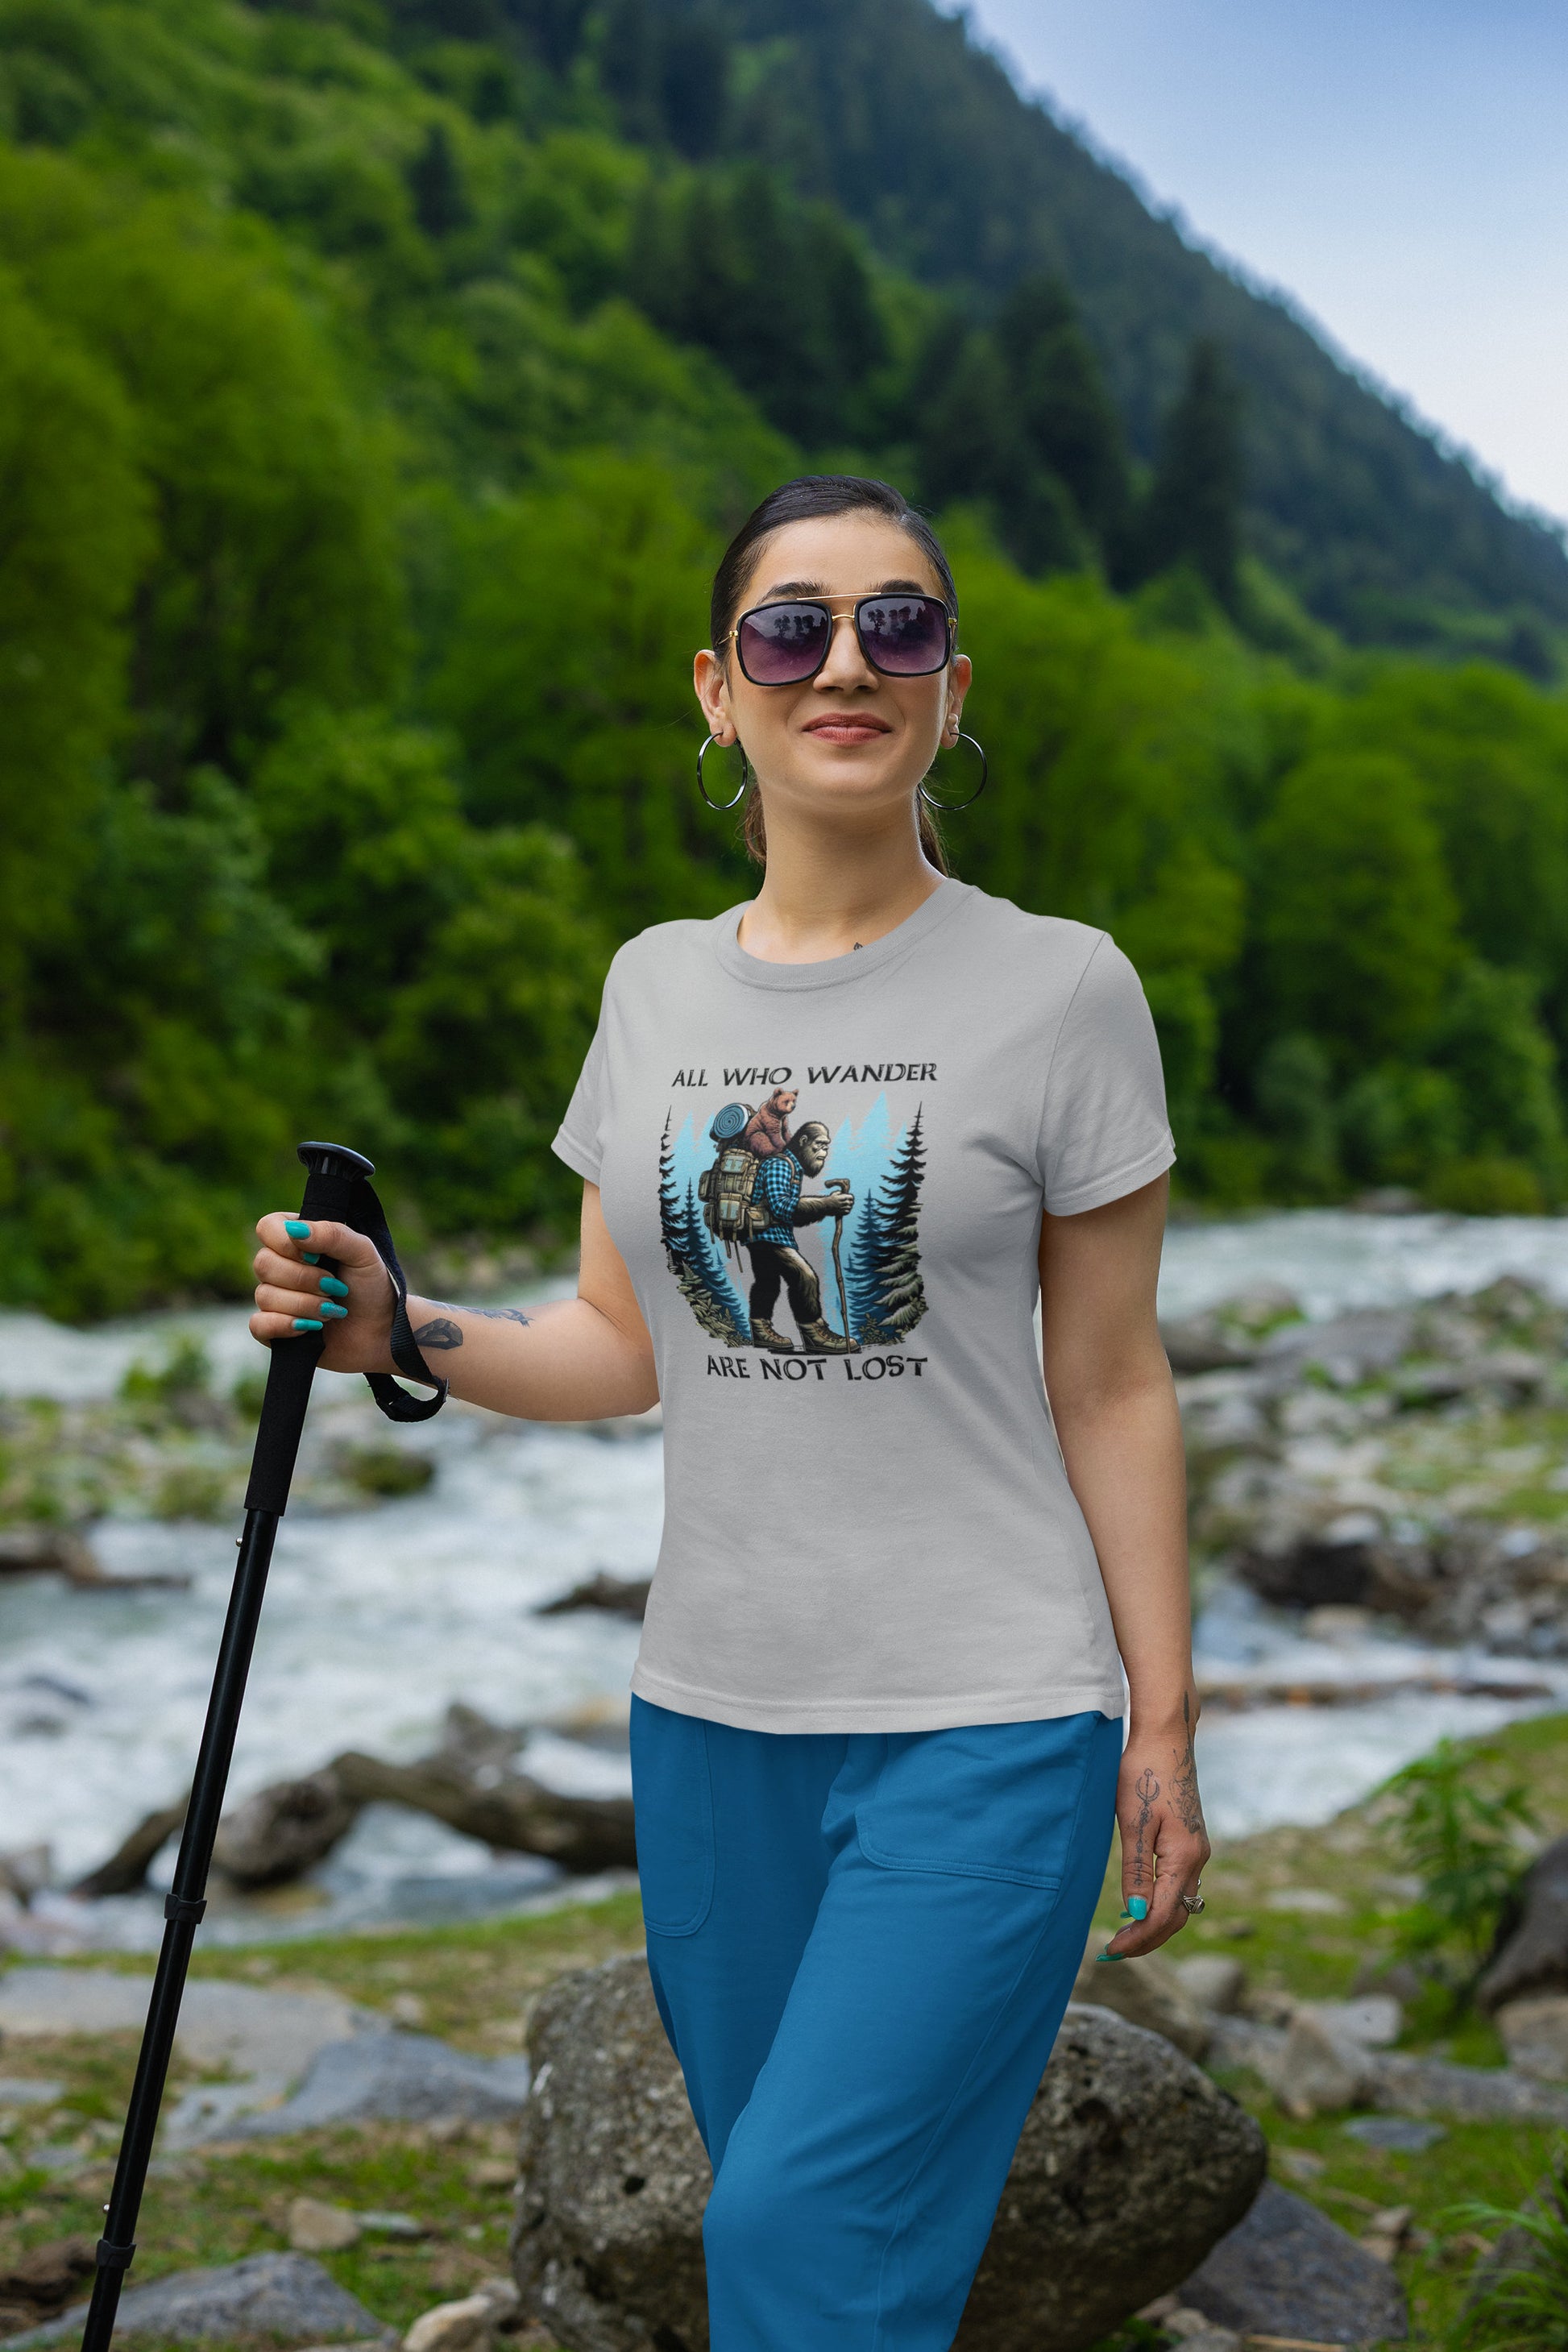 All who wander are not lost - hiking Bigfoot and bear cub t-shirt (grey)